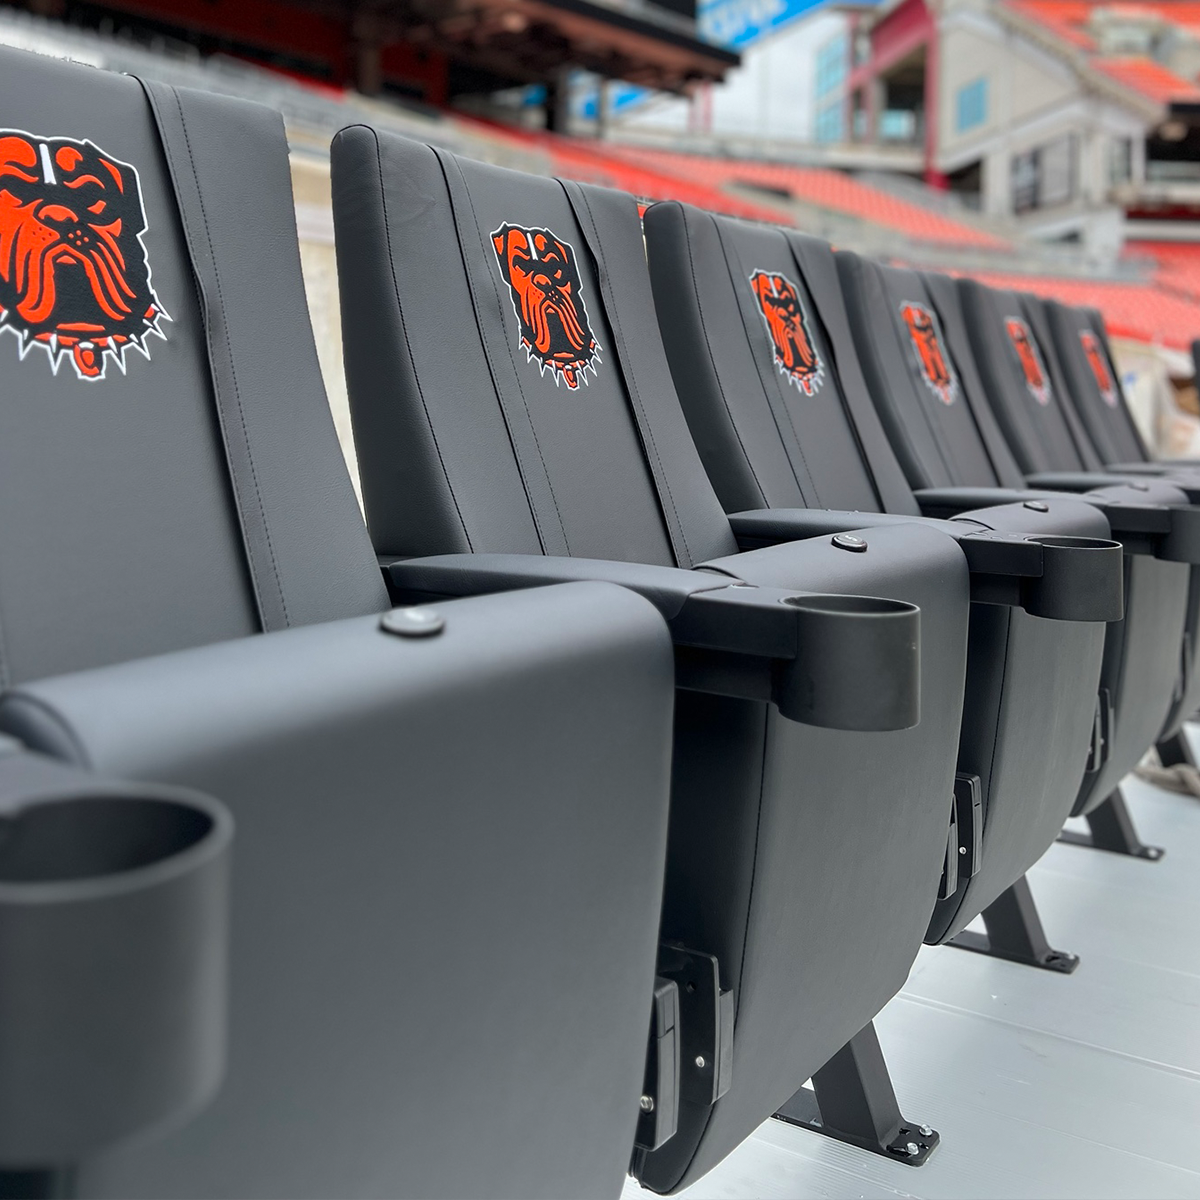 SuiteMax 3.5 VIP Seats with Philadelphia Flyers Logo